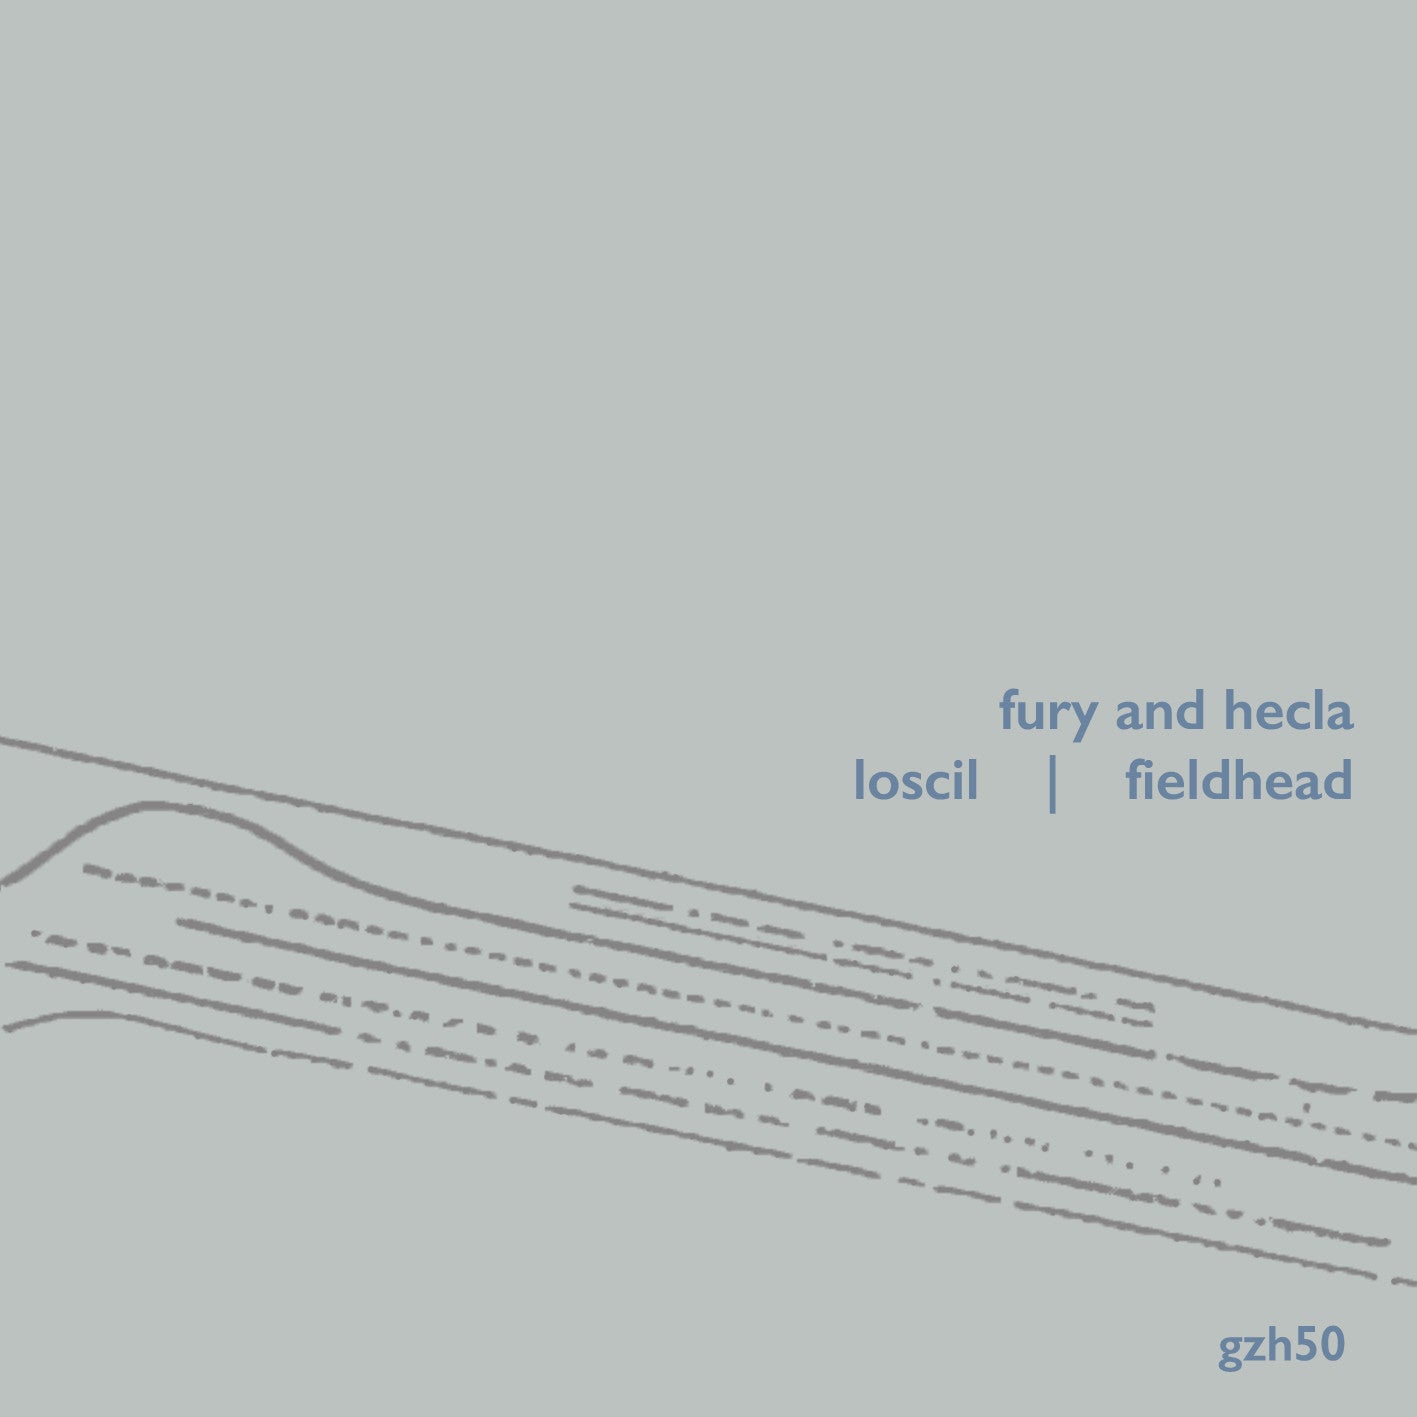 (GZH50) LOSCIL / FIELDHEAD - fury and hecla